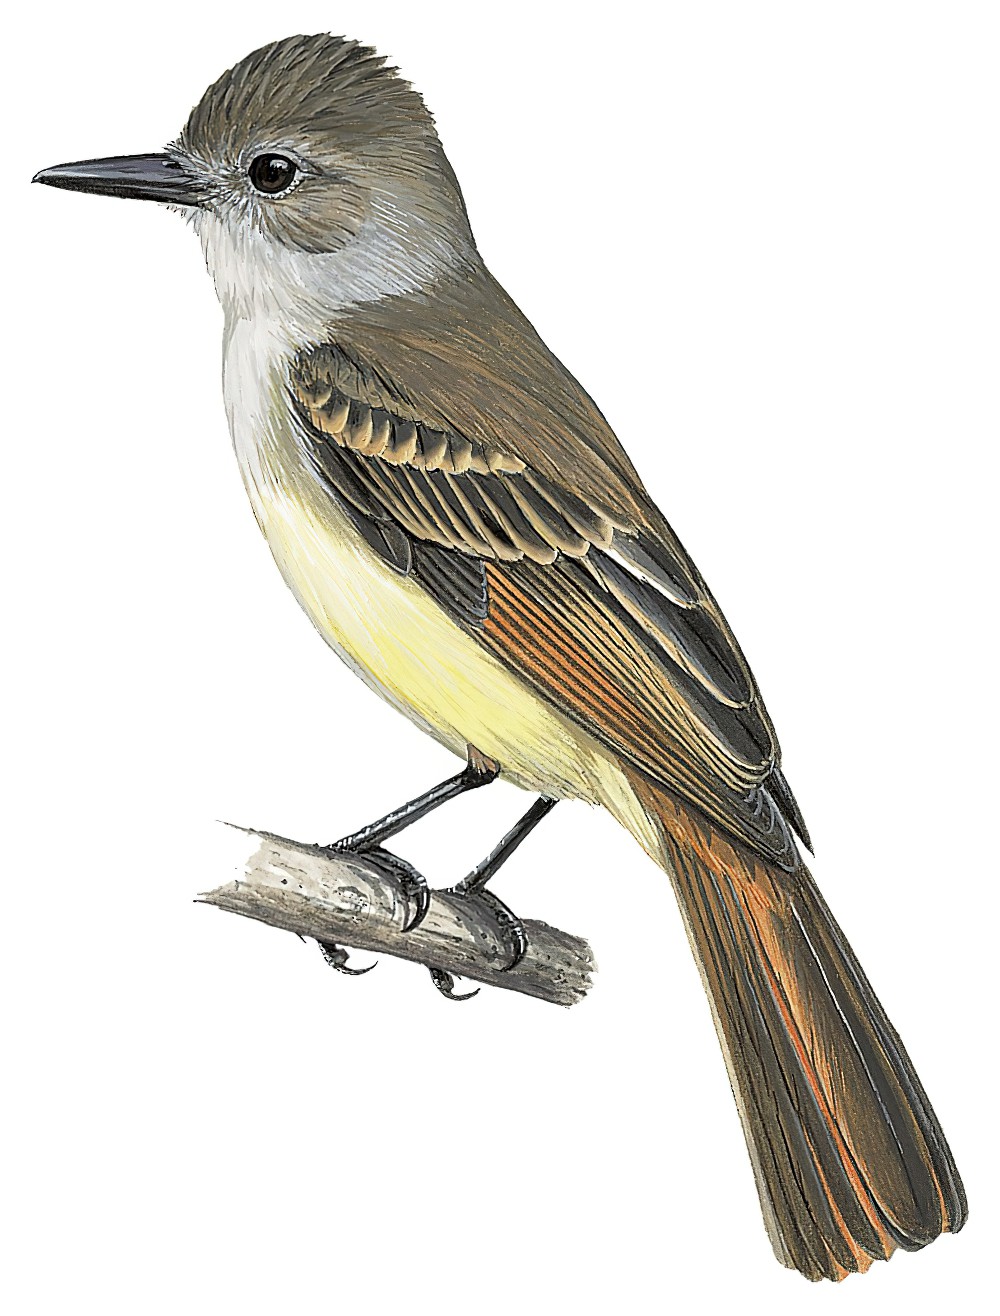 安岛蝇霸鹟 / Lesser Antillean Flycatcher / Myiarchus oberi